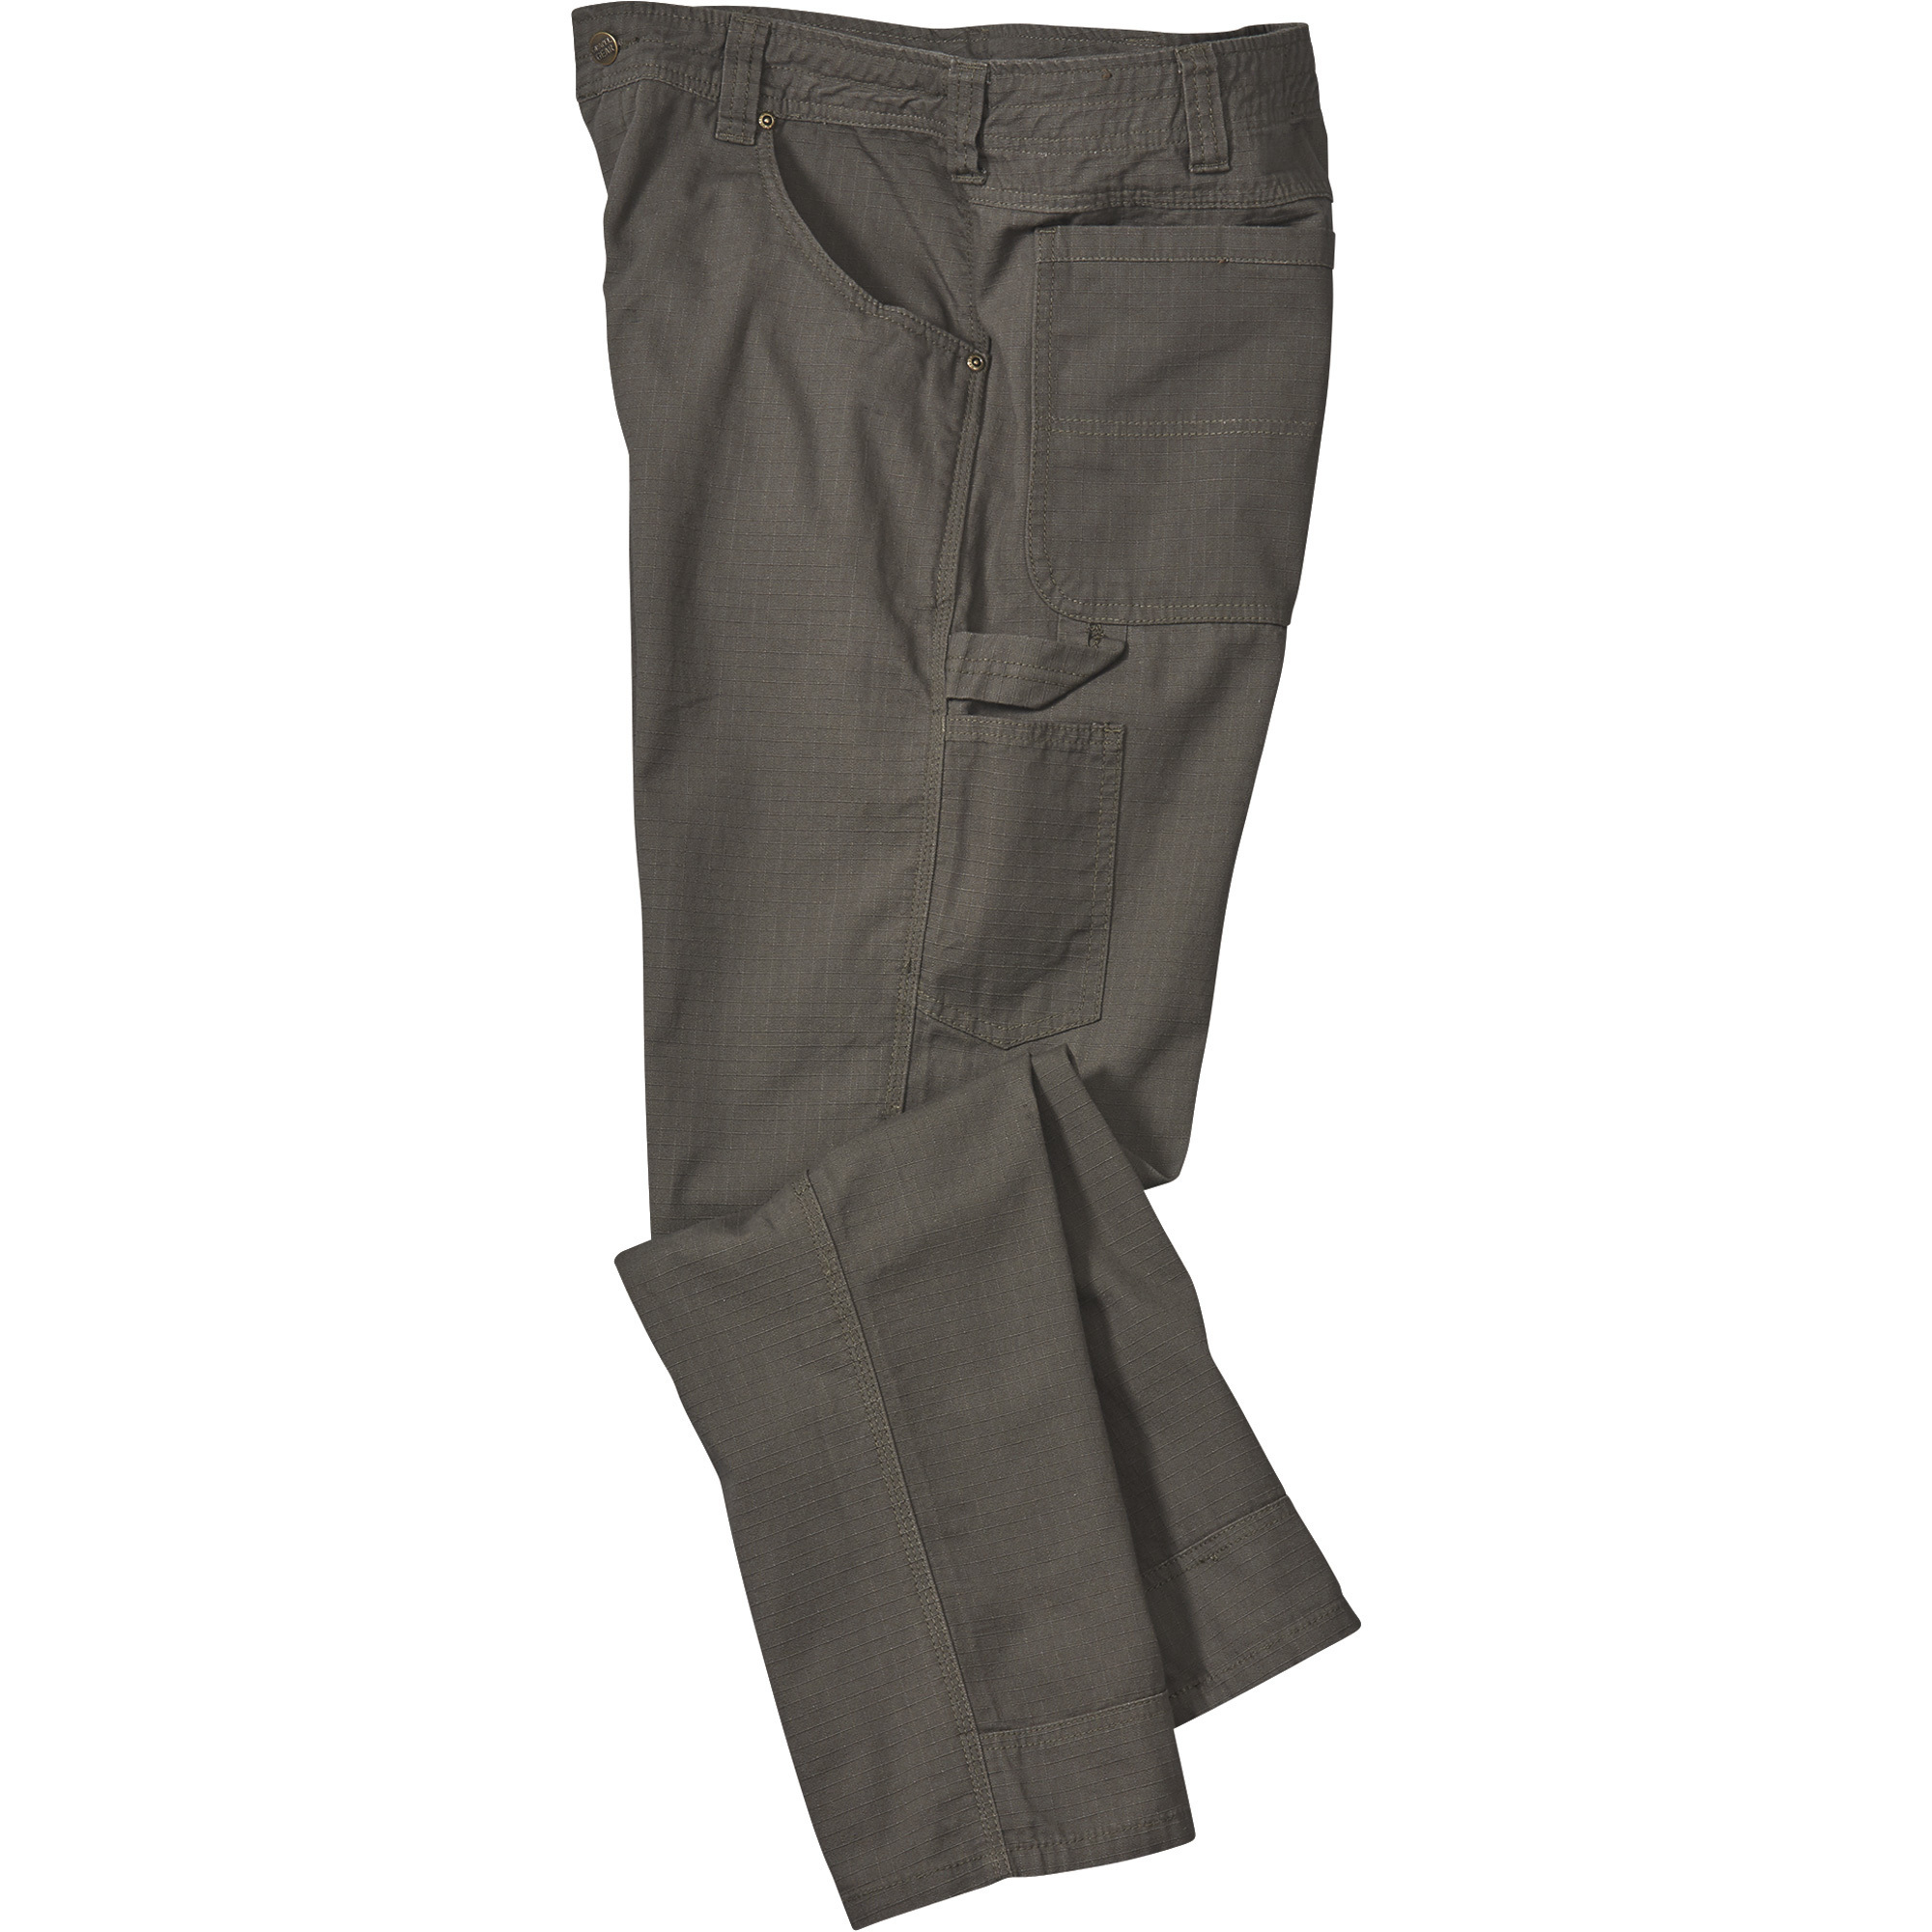 Gravel Gear Men's Cotton Ripstop Carpenter Pants with Teflon Fabric Protector â Moss, 34Inch Waist x 32Inch Inseam